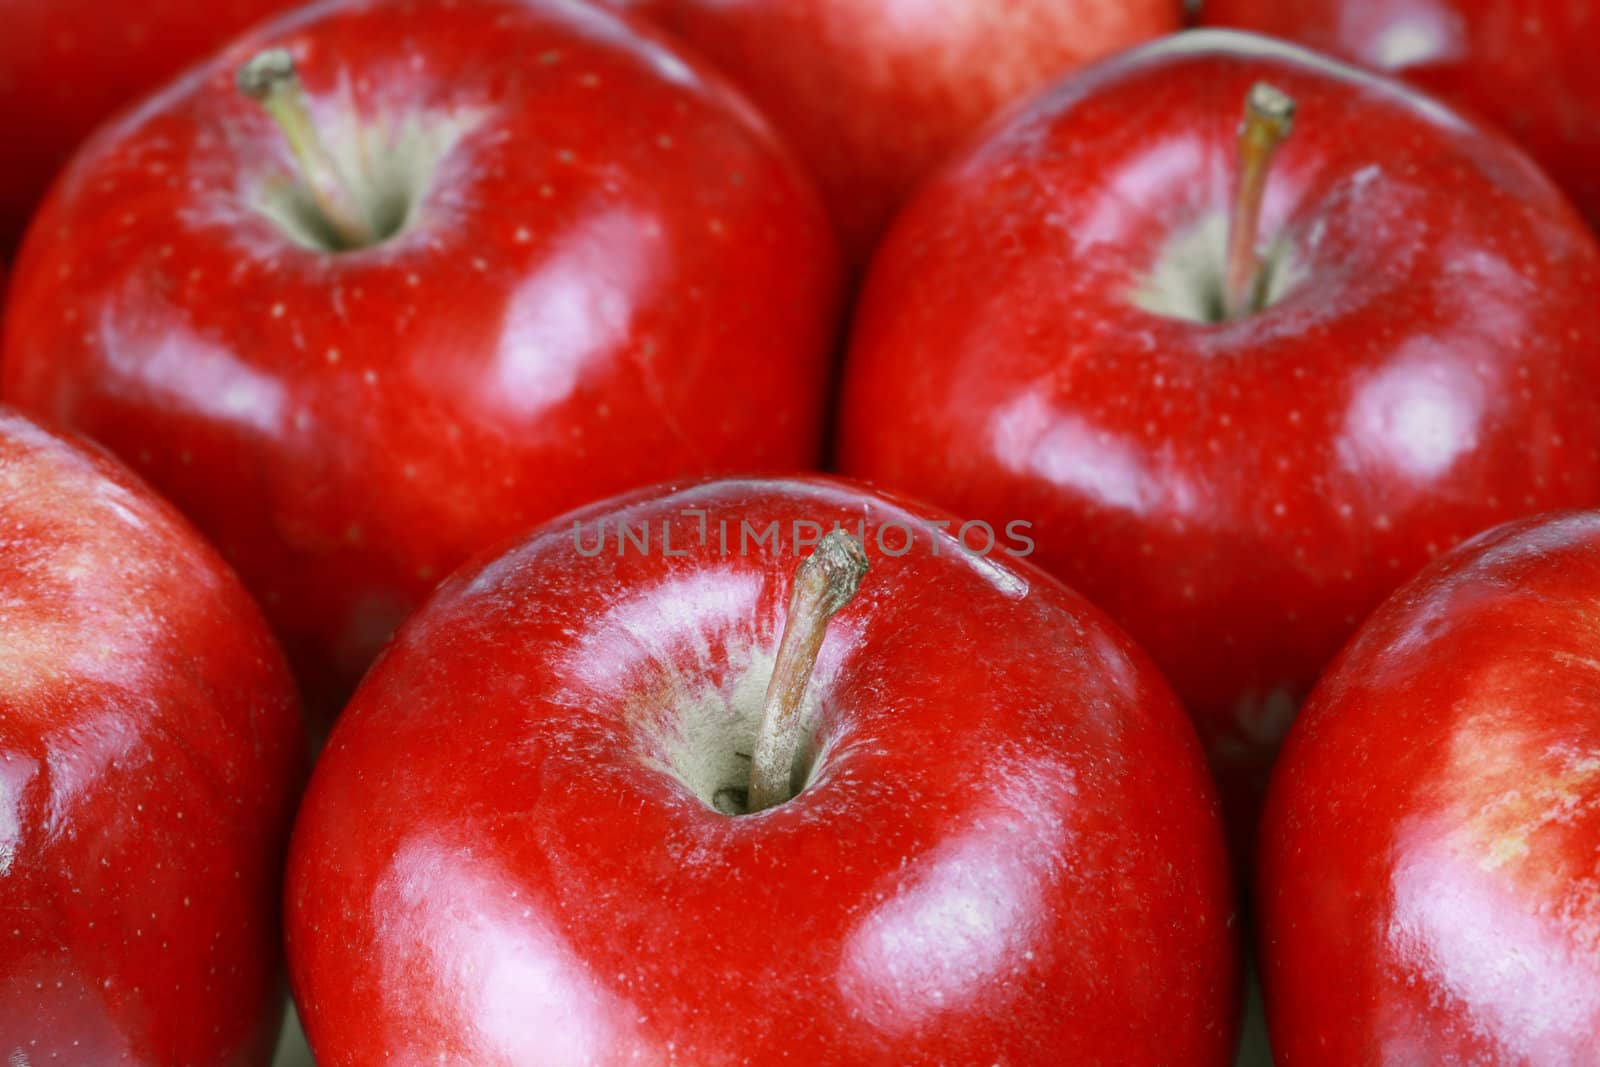 Red gala apples by jarenwicklund